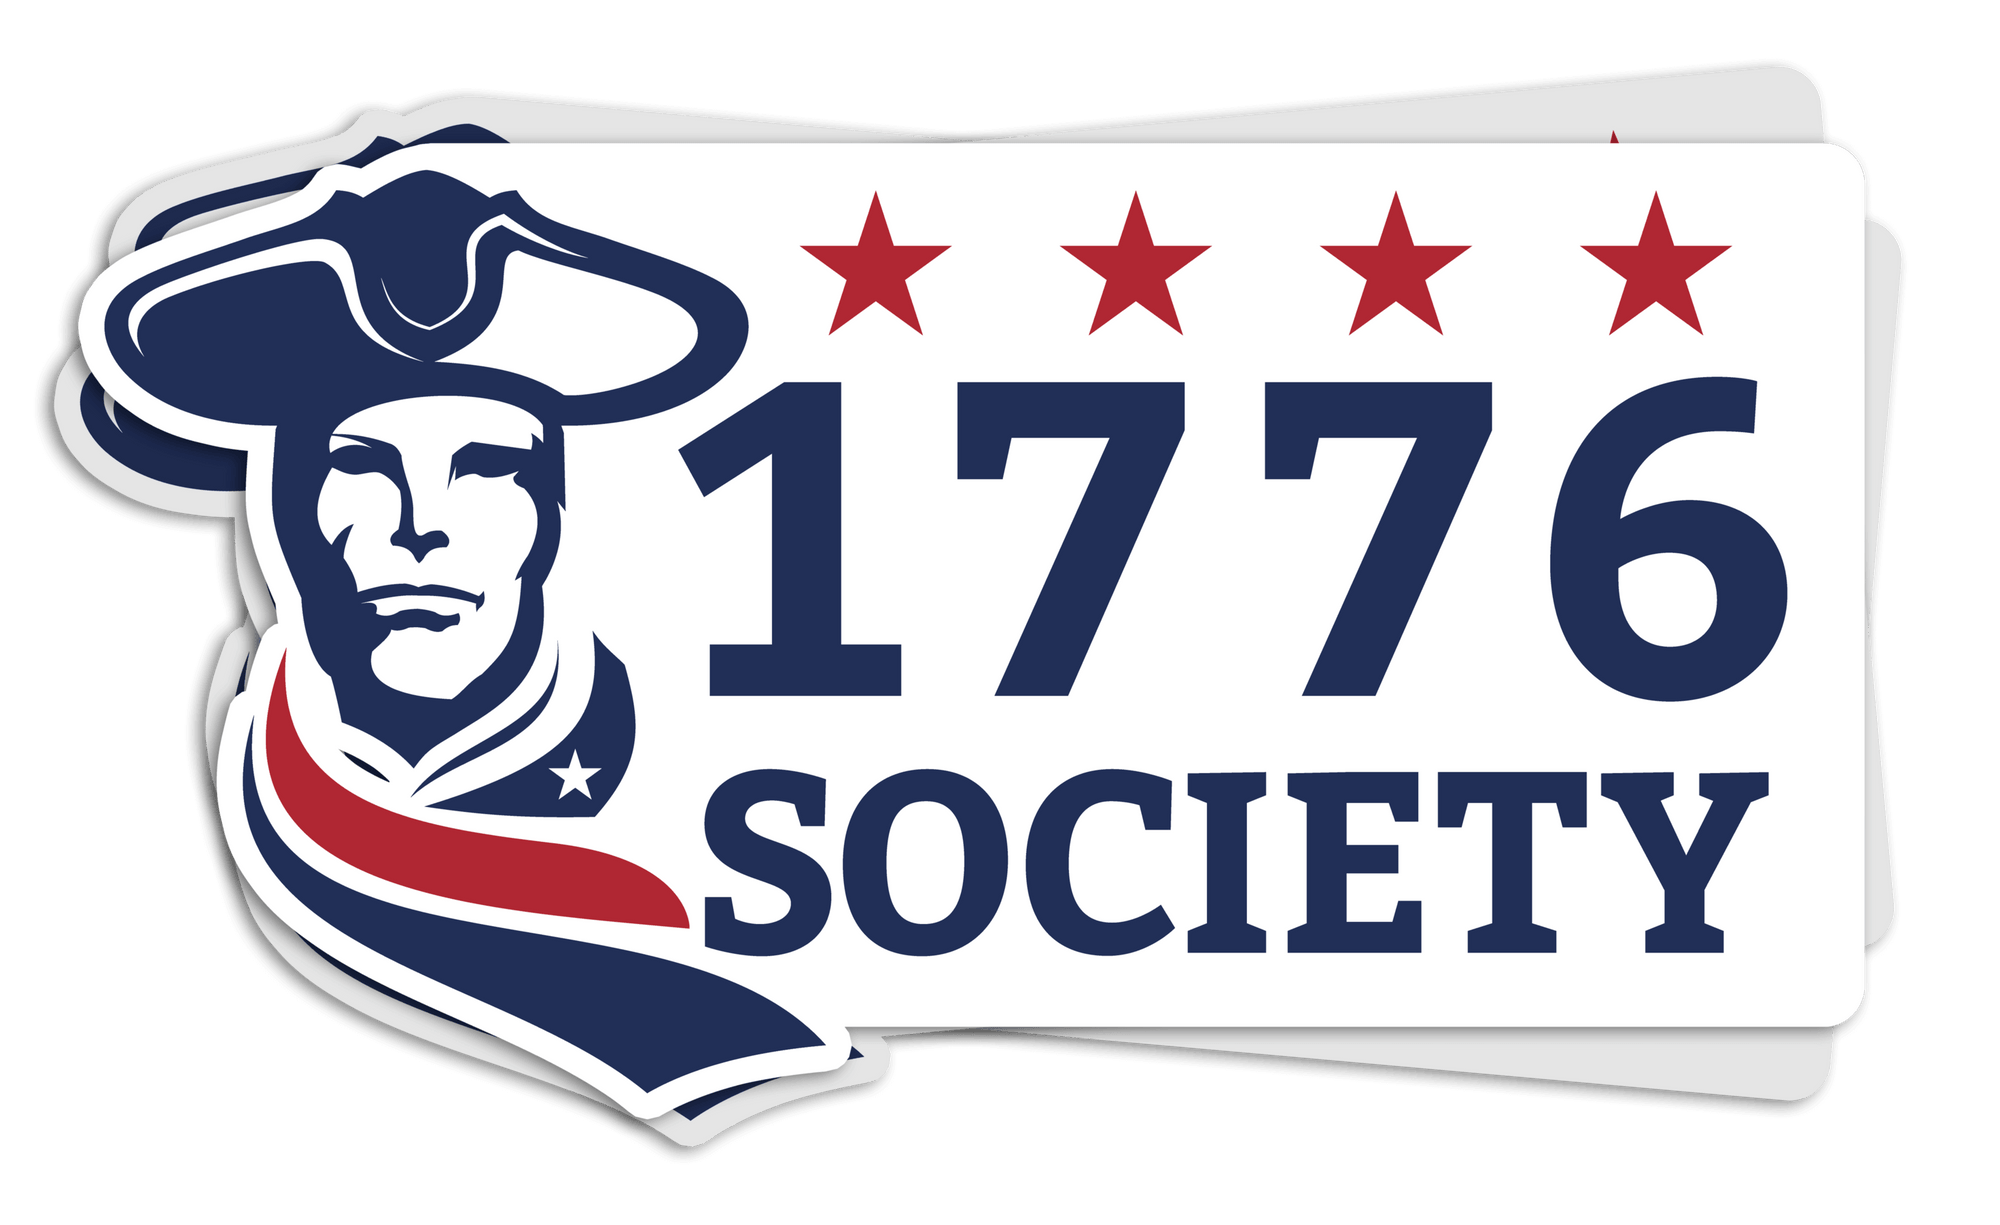 "1776 Society" - Decal